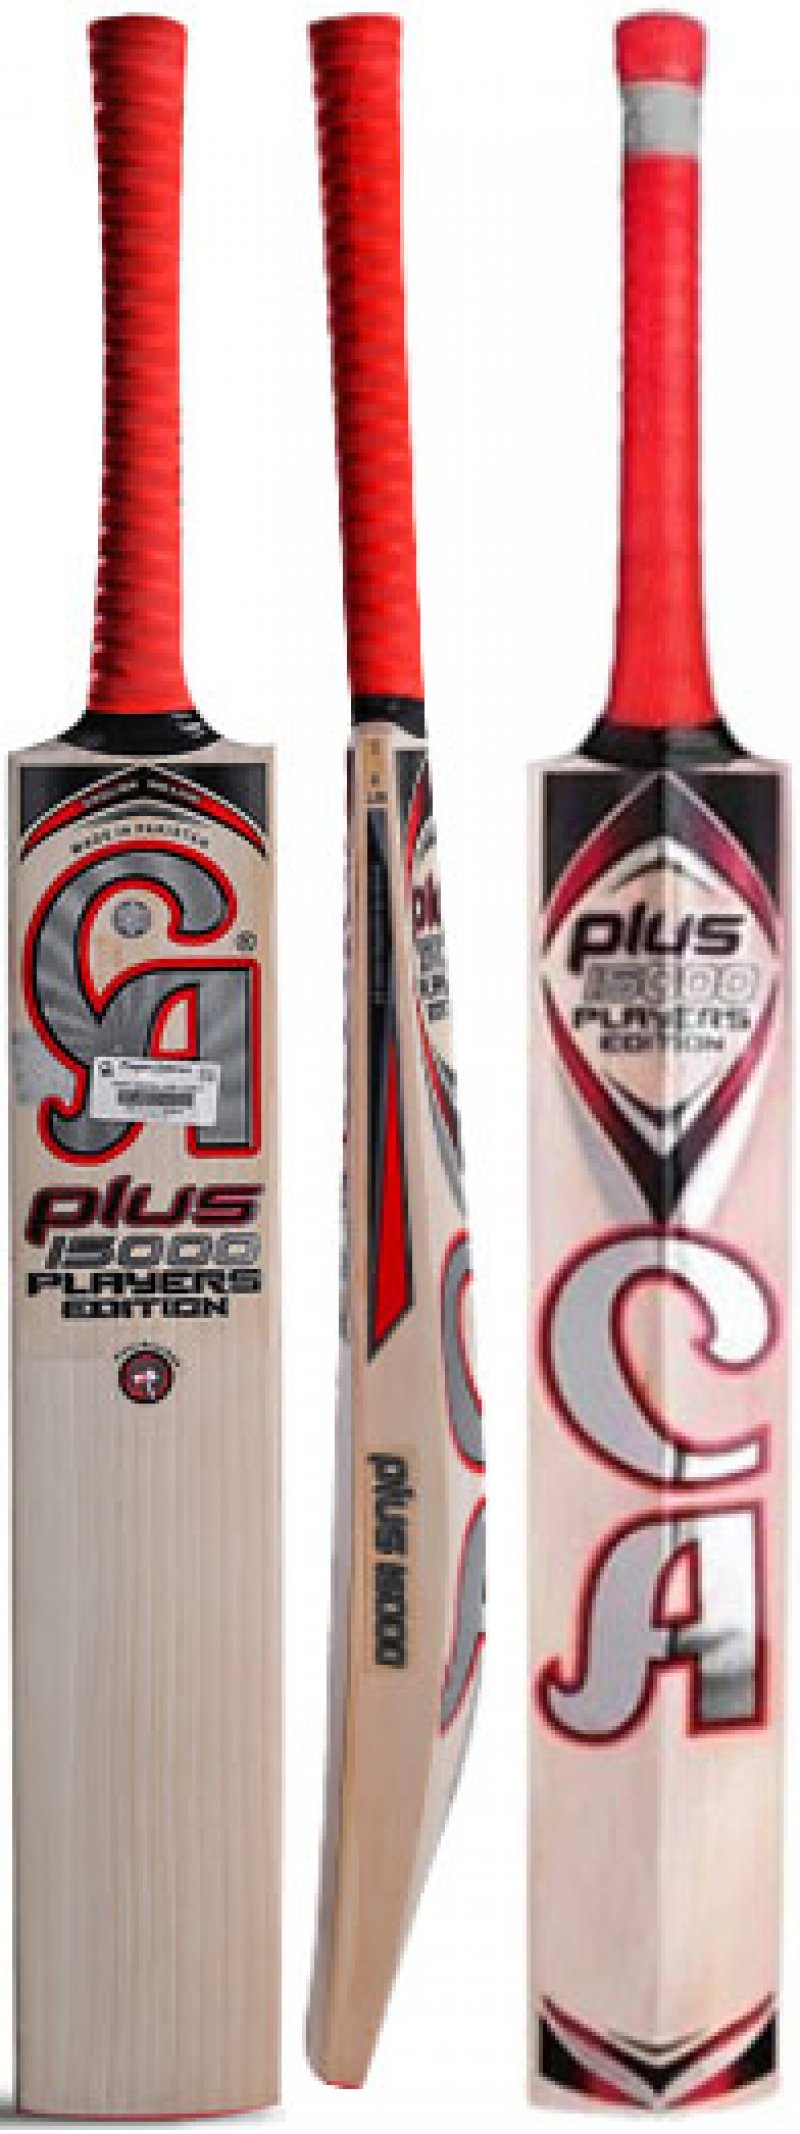 CA Plus 15000 Players Edition Cricket Bat